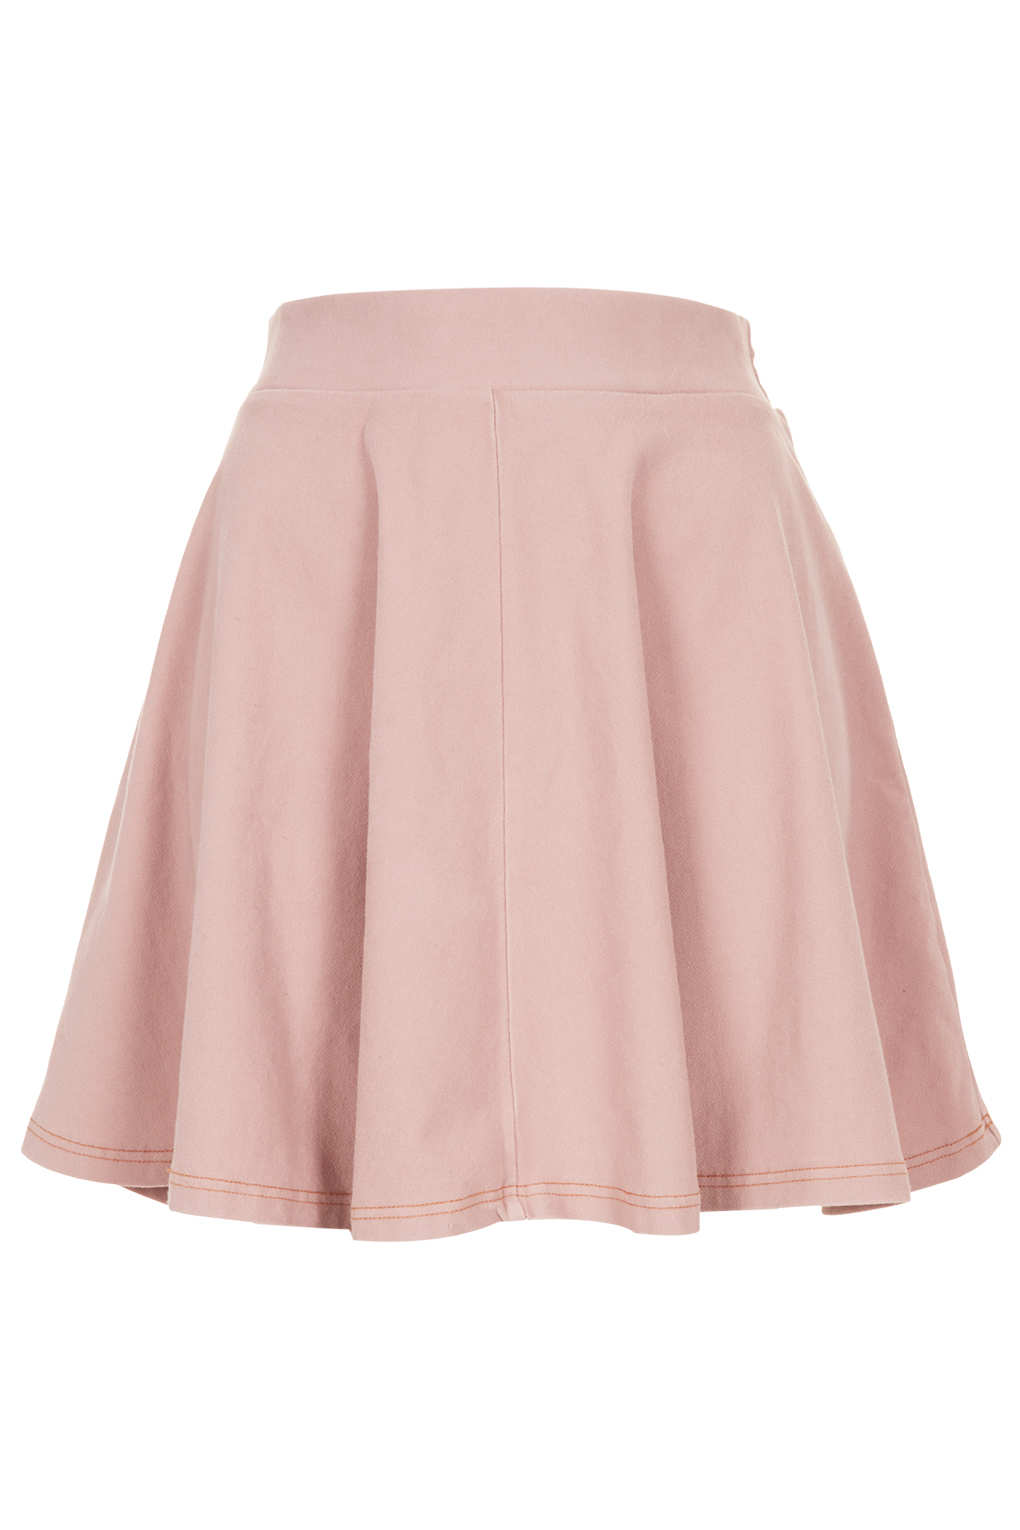 Lyst - Topshop Pink Denim Look Skater Skirt in Pink